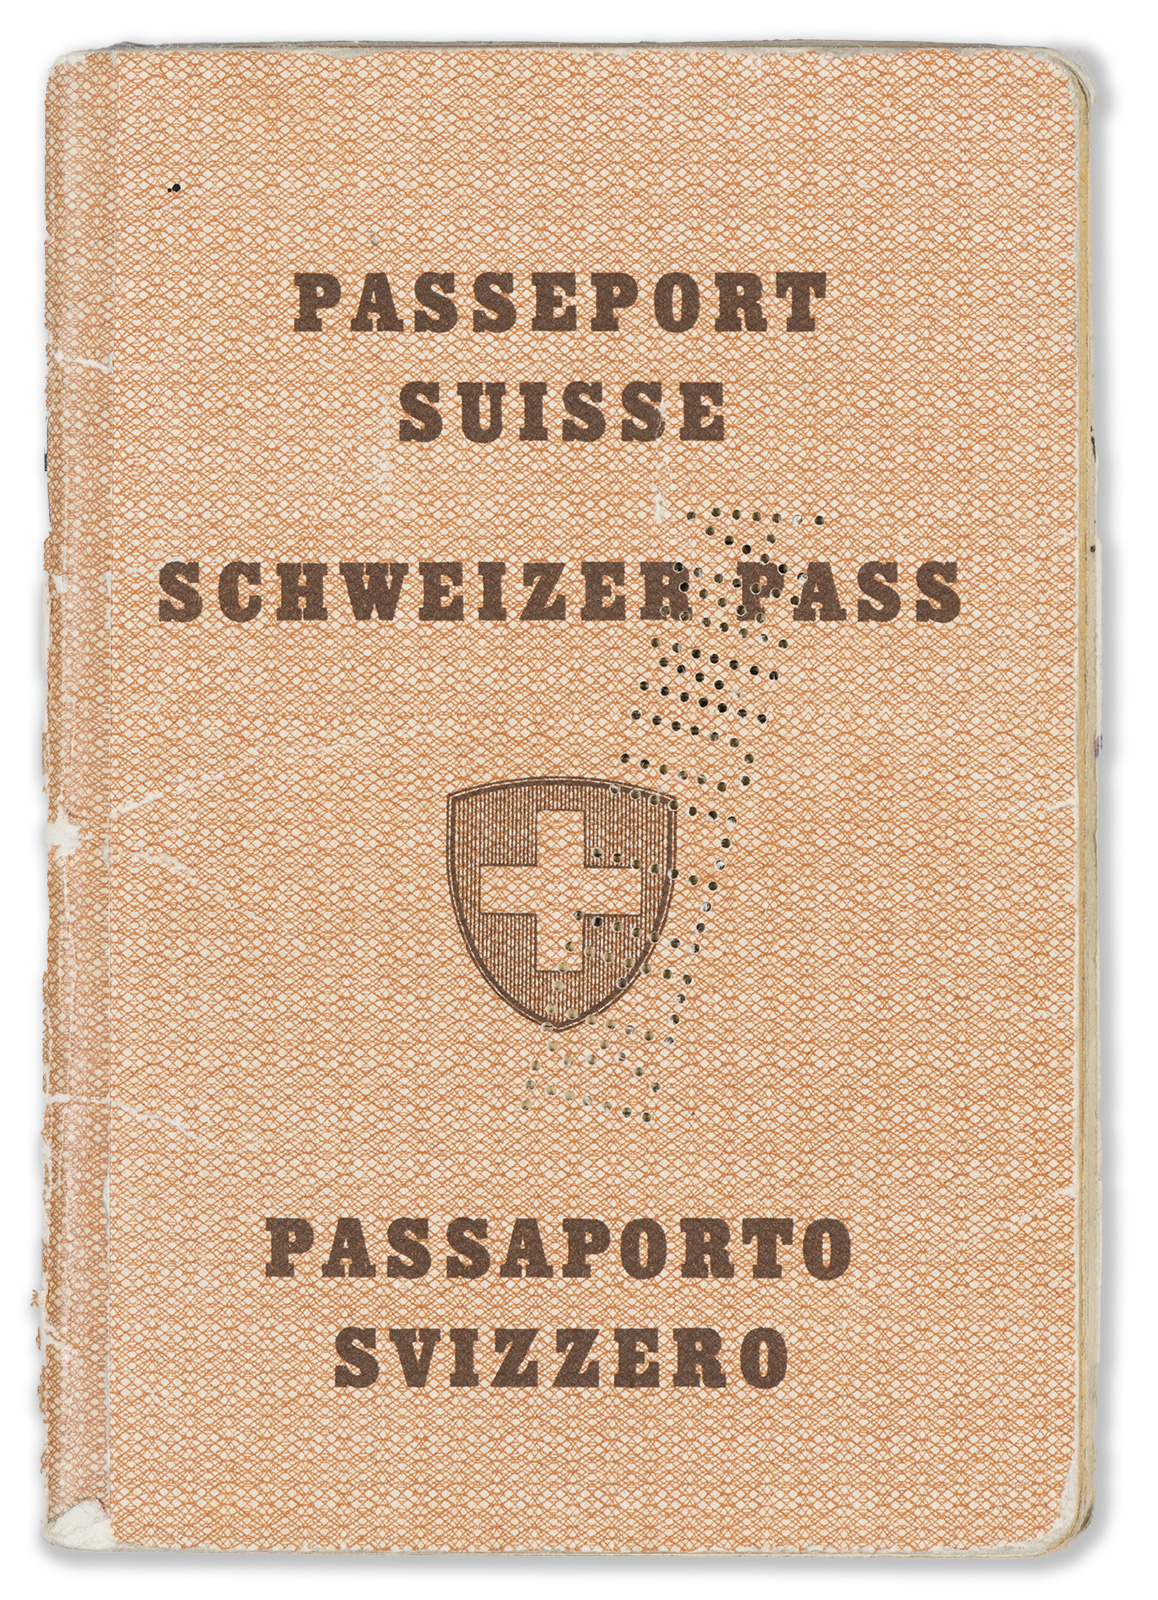 Viejo pasaporte suizo